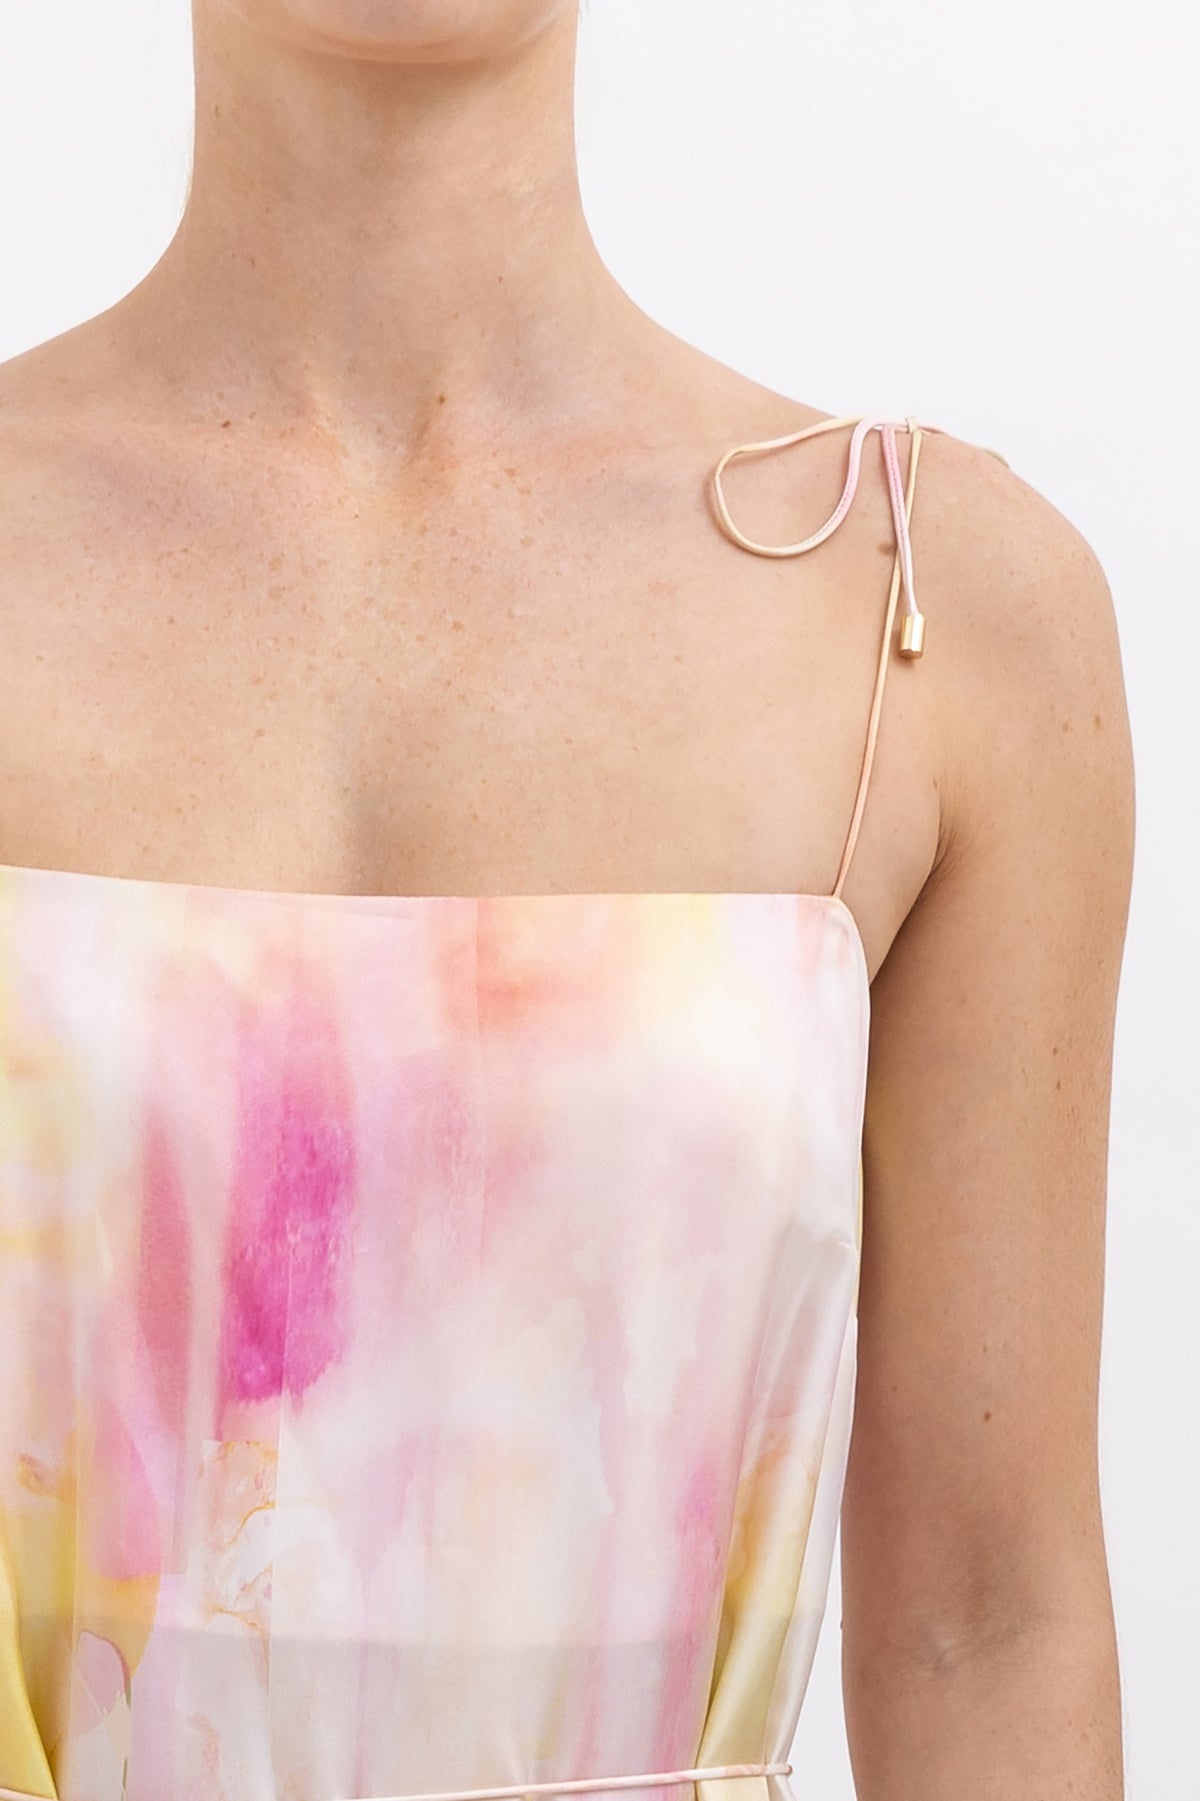 Prima Abstract Print Silk Dress